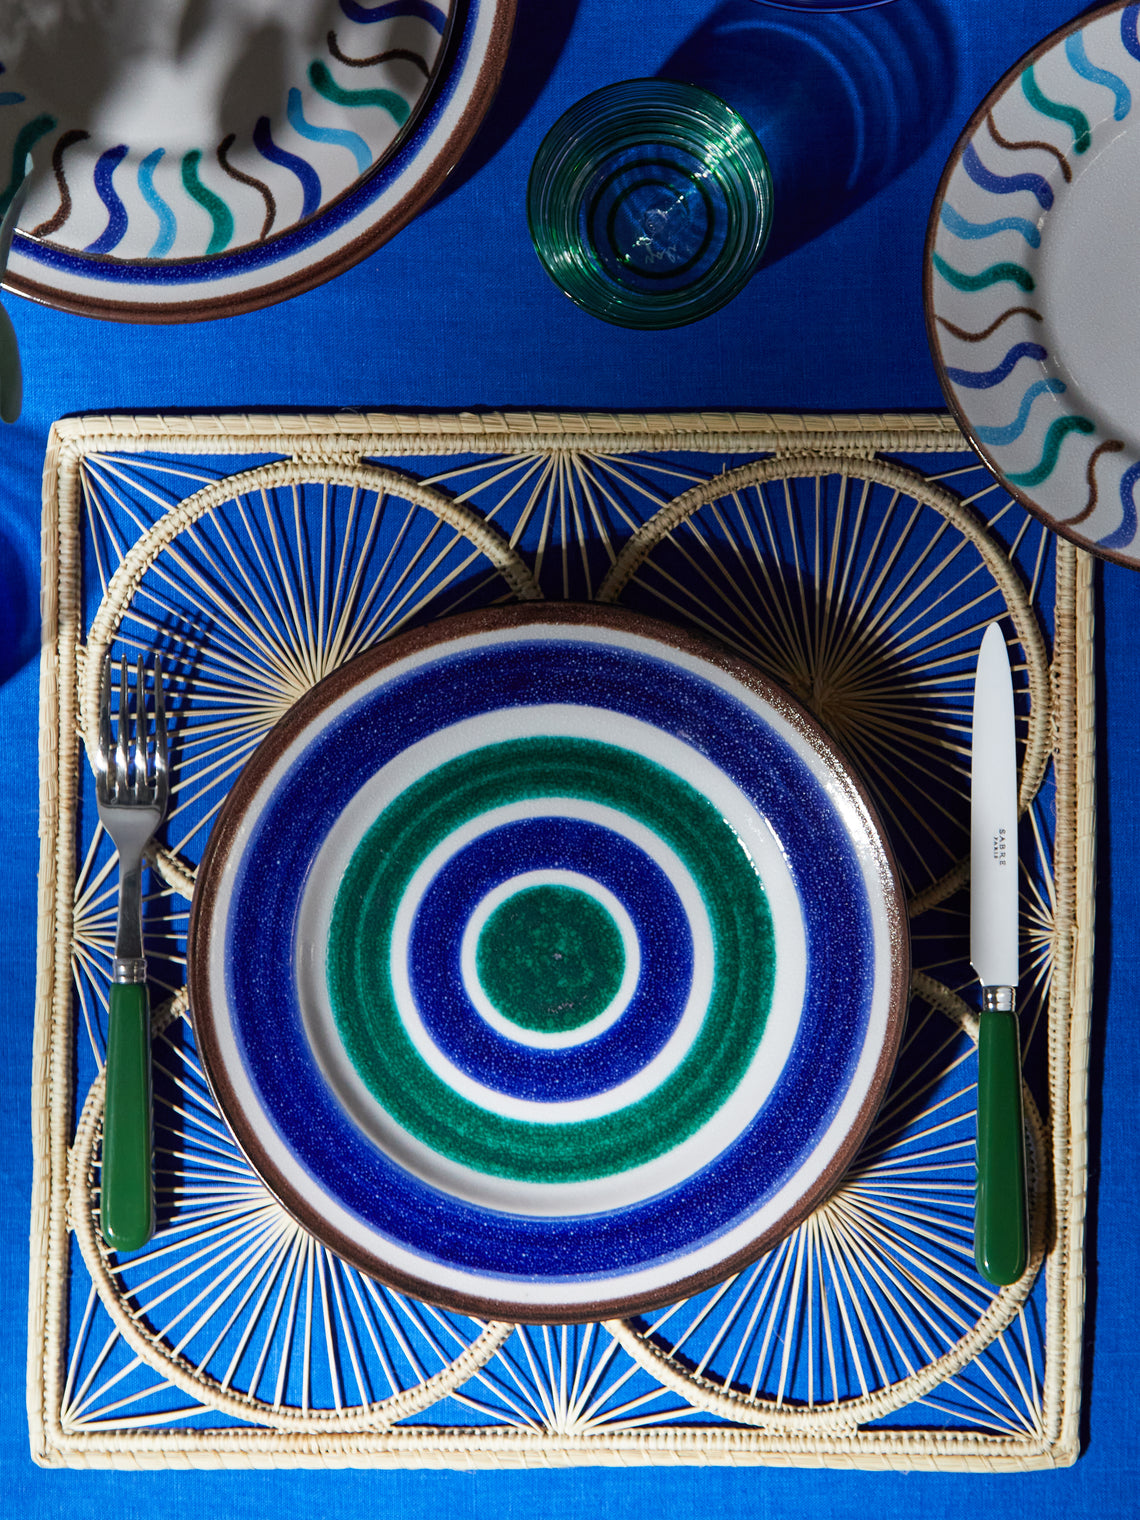 Ceramica Pinto - Vietri Hand-Painted Ceramic Side Plates (Set of 4) -  - ABASK